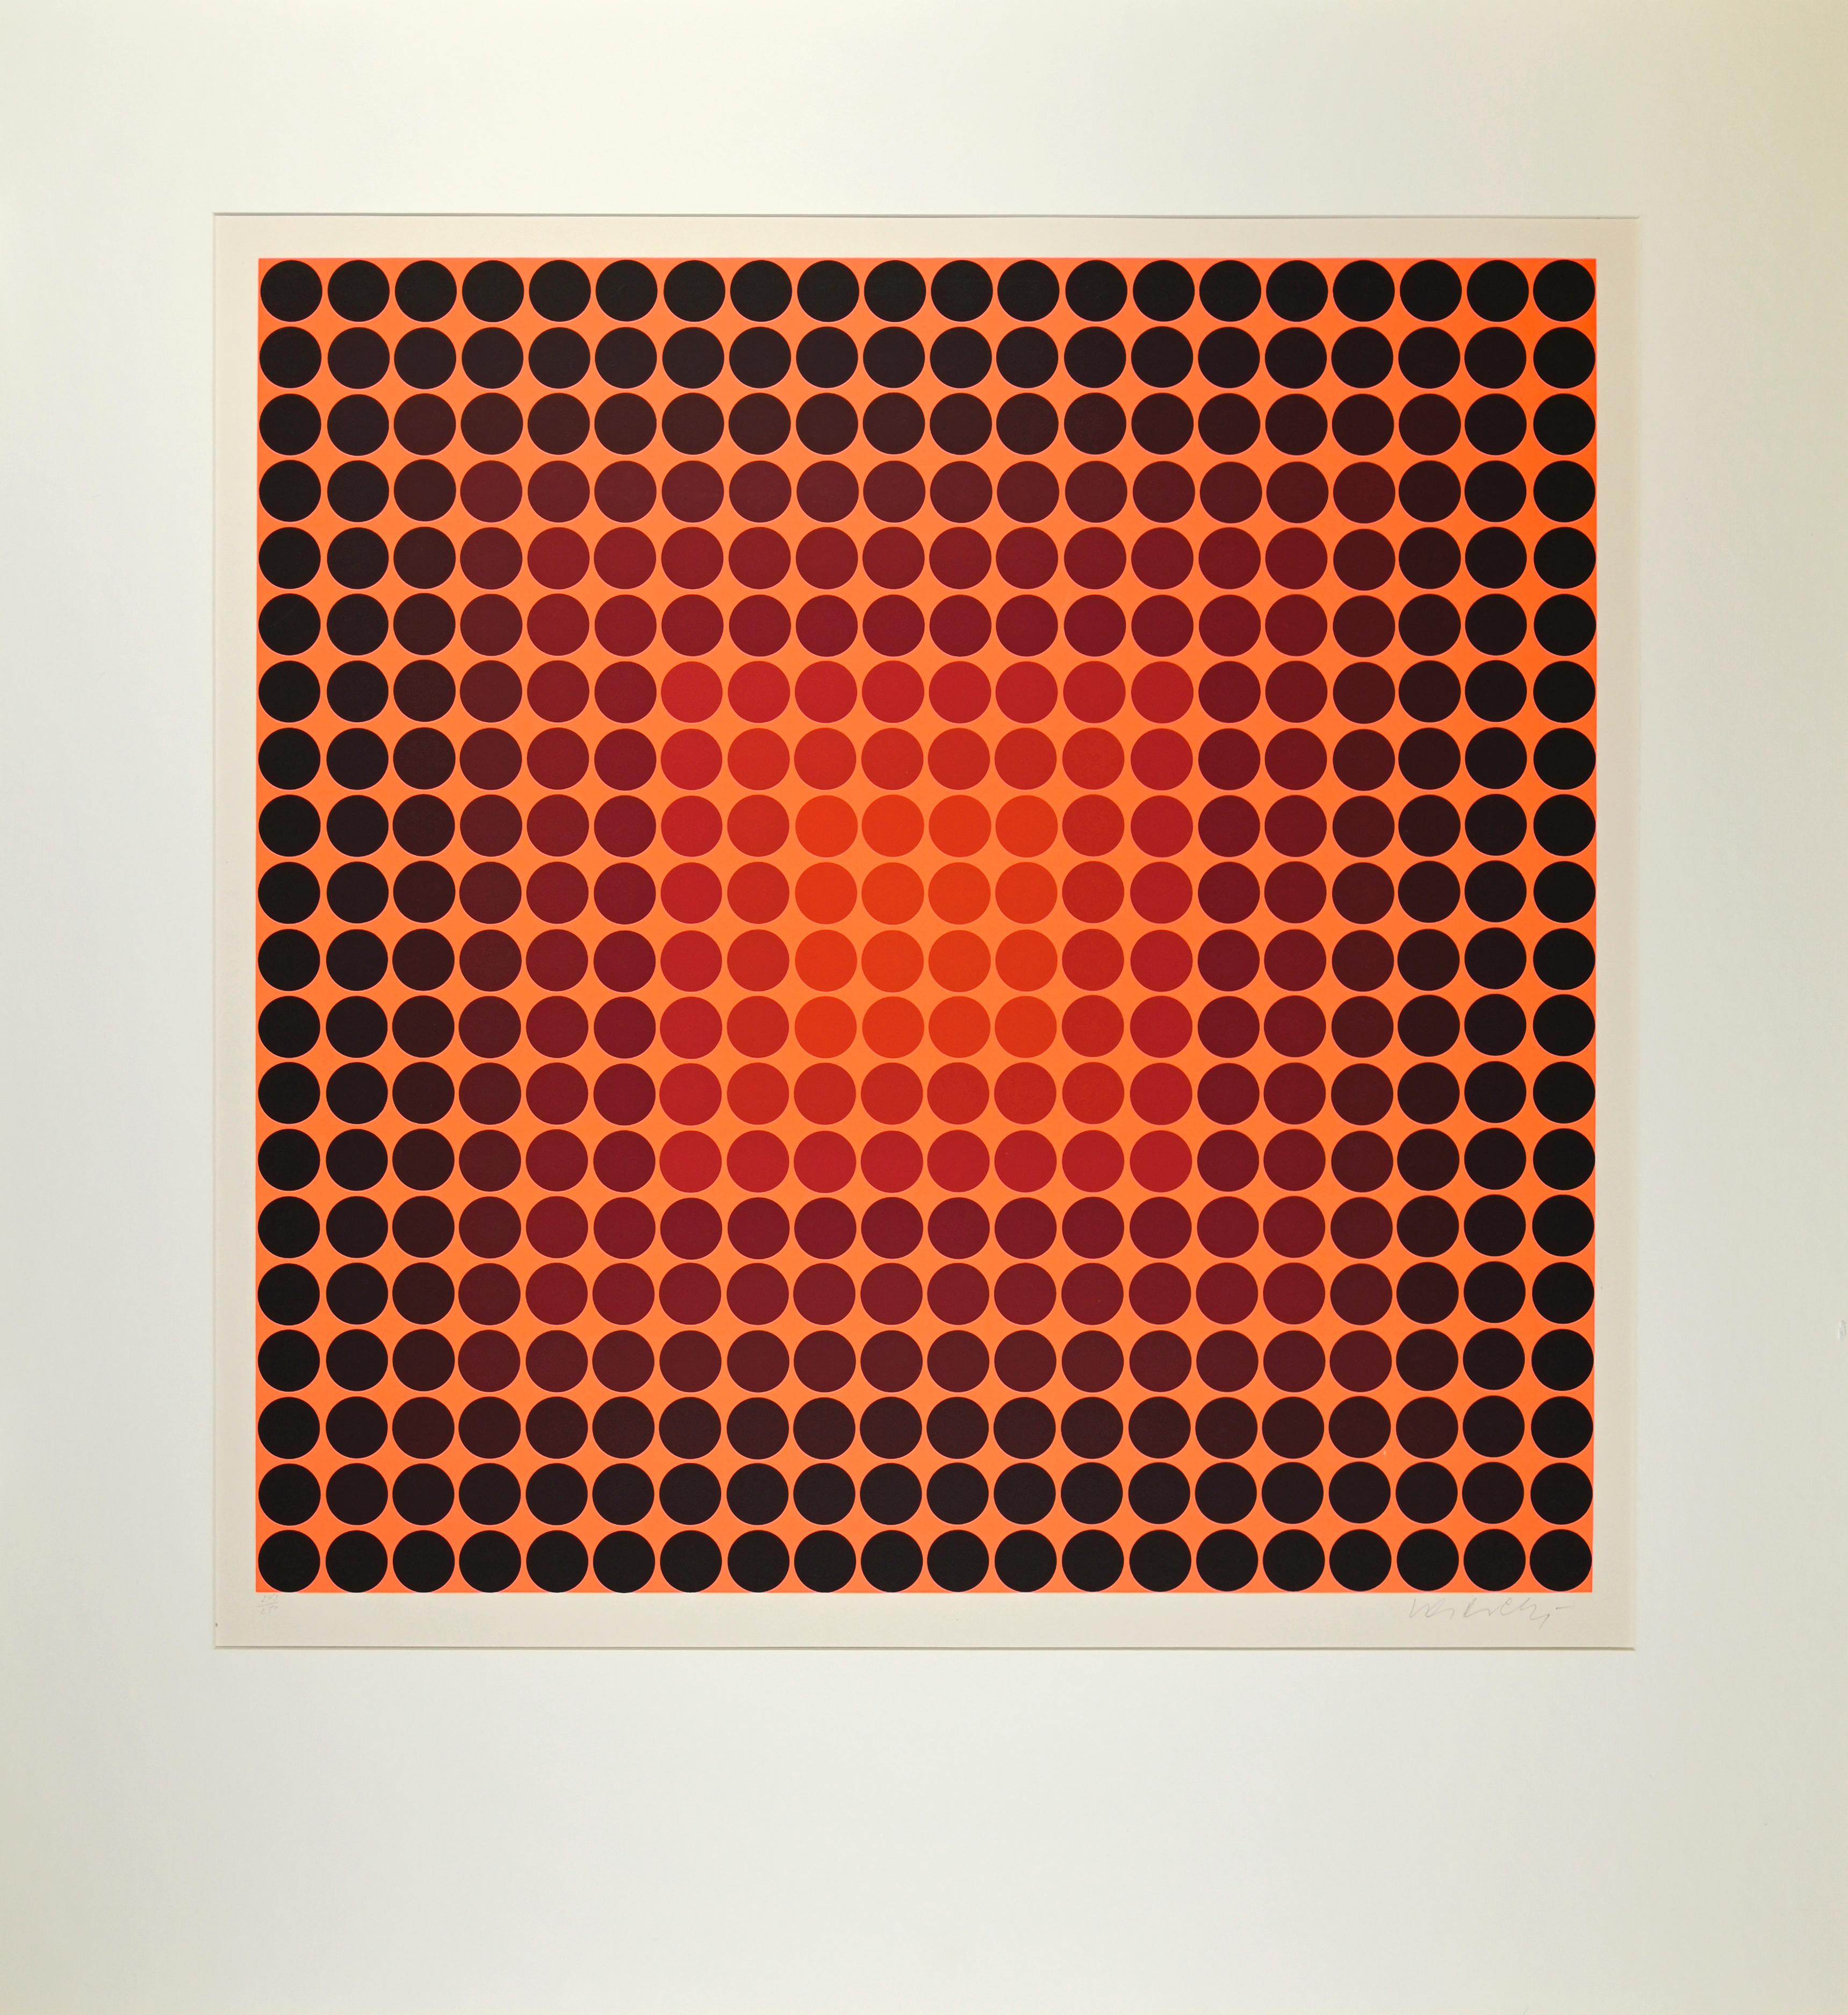 Abstract Print Victor Vasarely - Des points noirs sur orange - Impression sérigraphiée de V. Vasarely - 1965